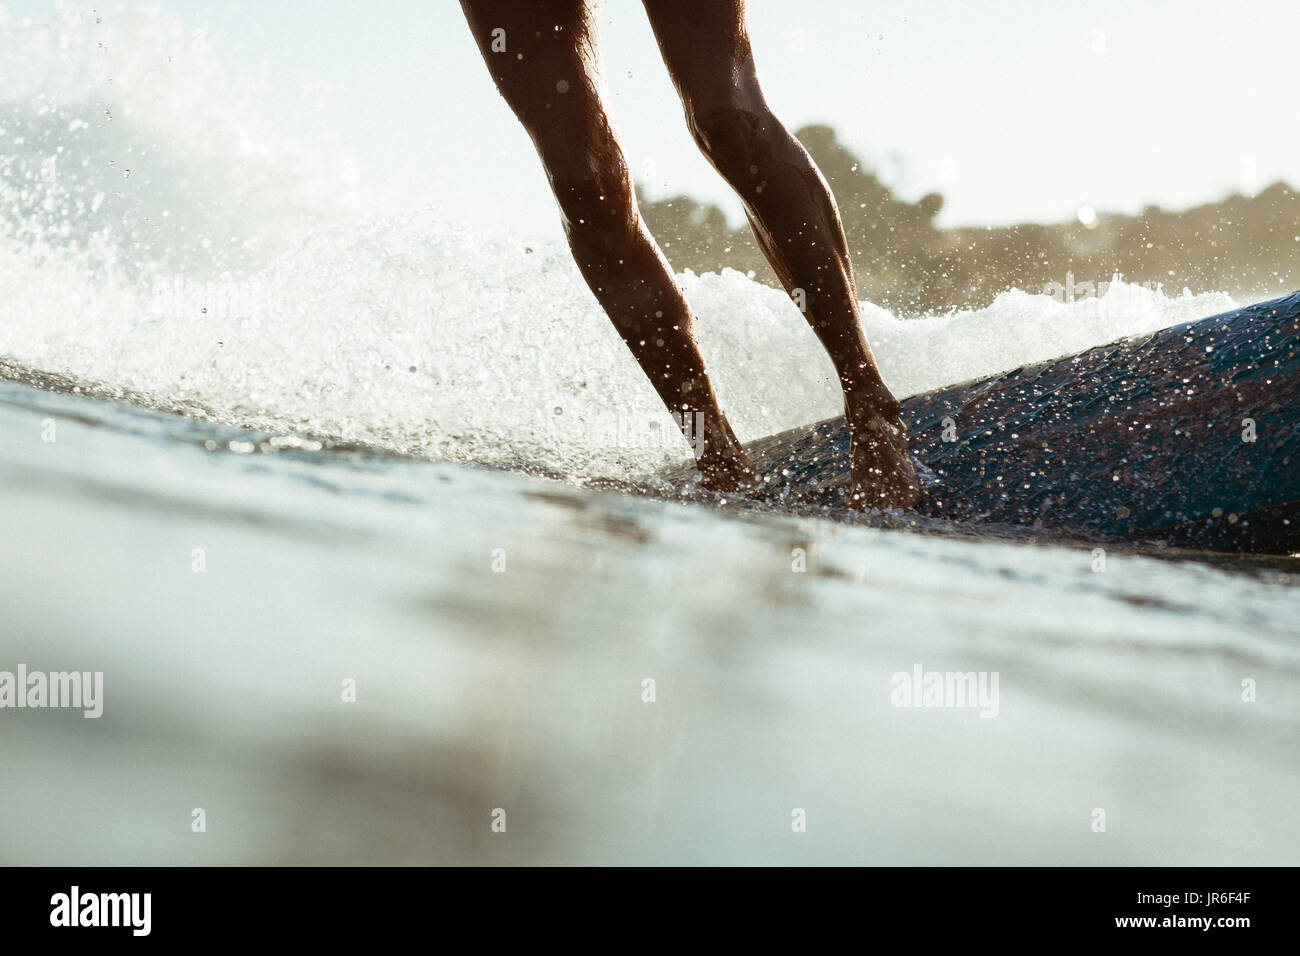 Woman surfing, Malibu, California, America, USA Stock Photo